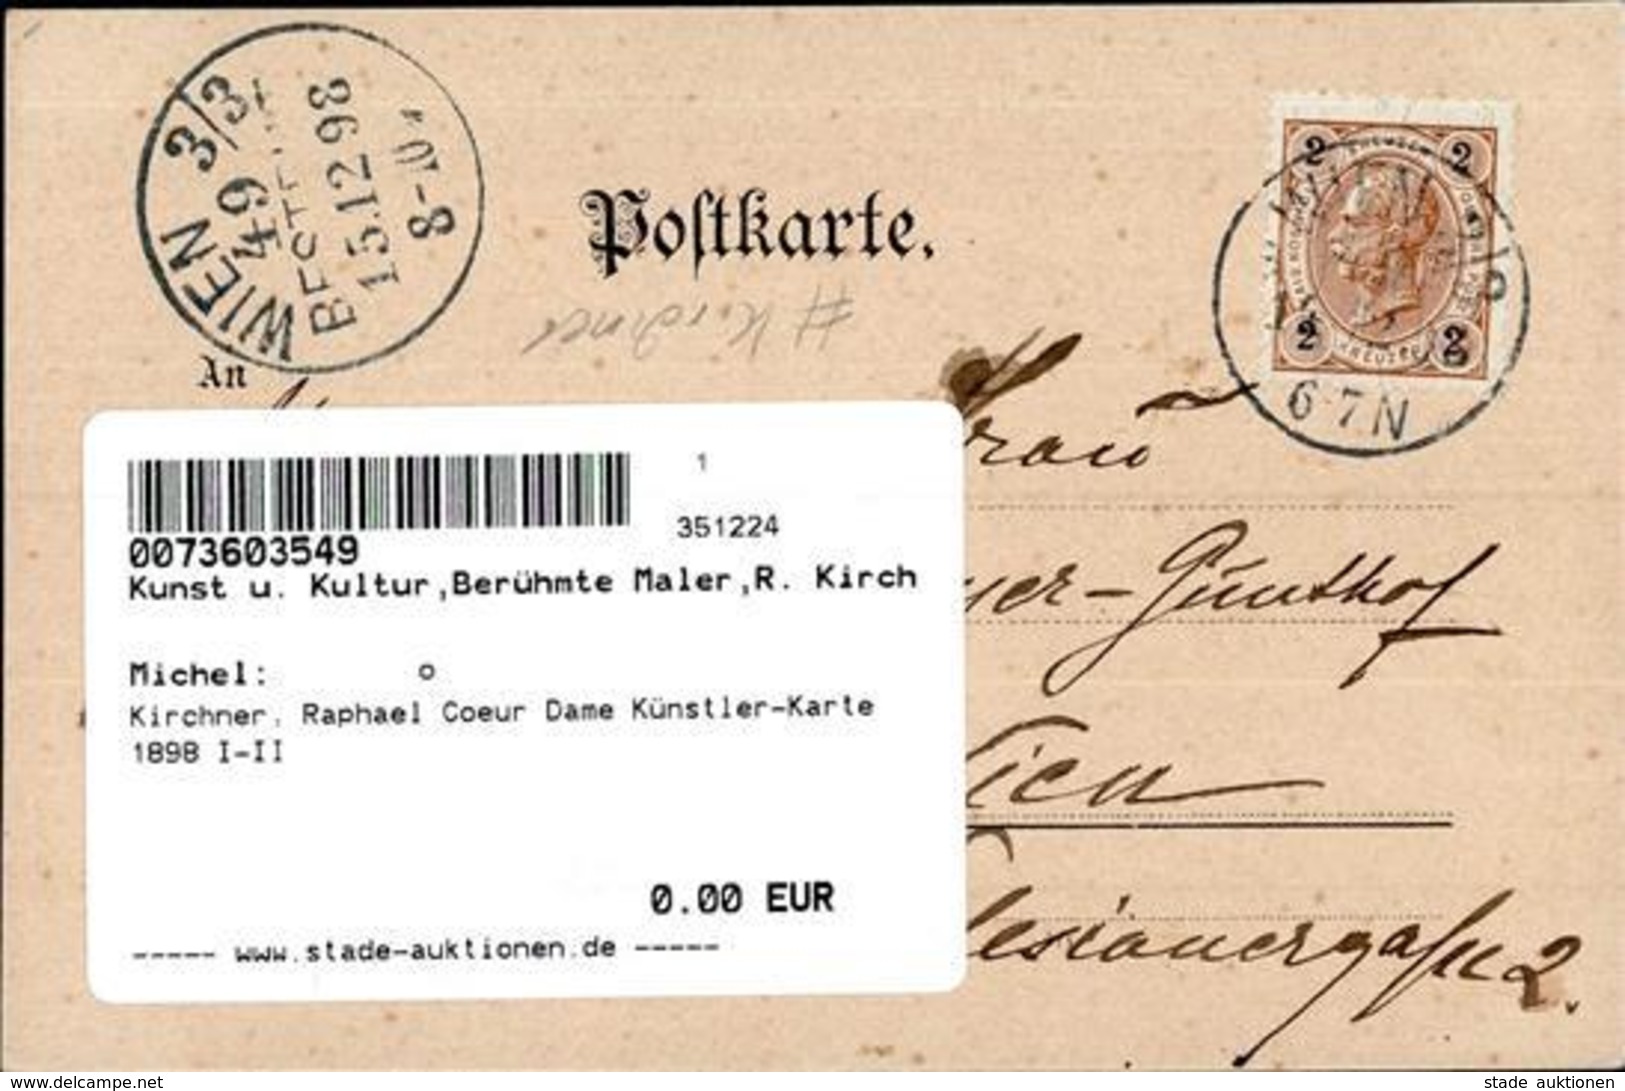 Kirchner, Raphael Coeur Dame Künstler-Karte 1898 I-II - Kirchner, Raphael